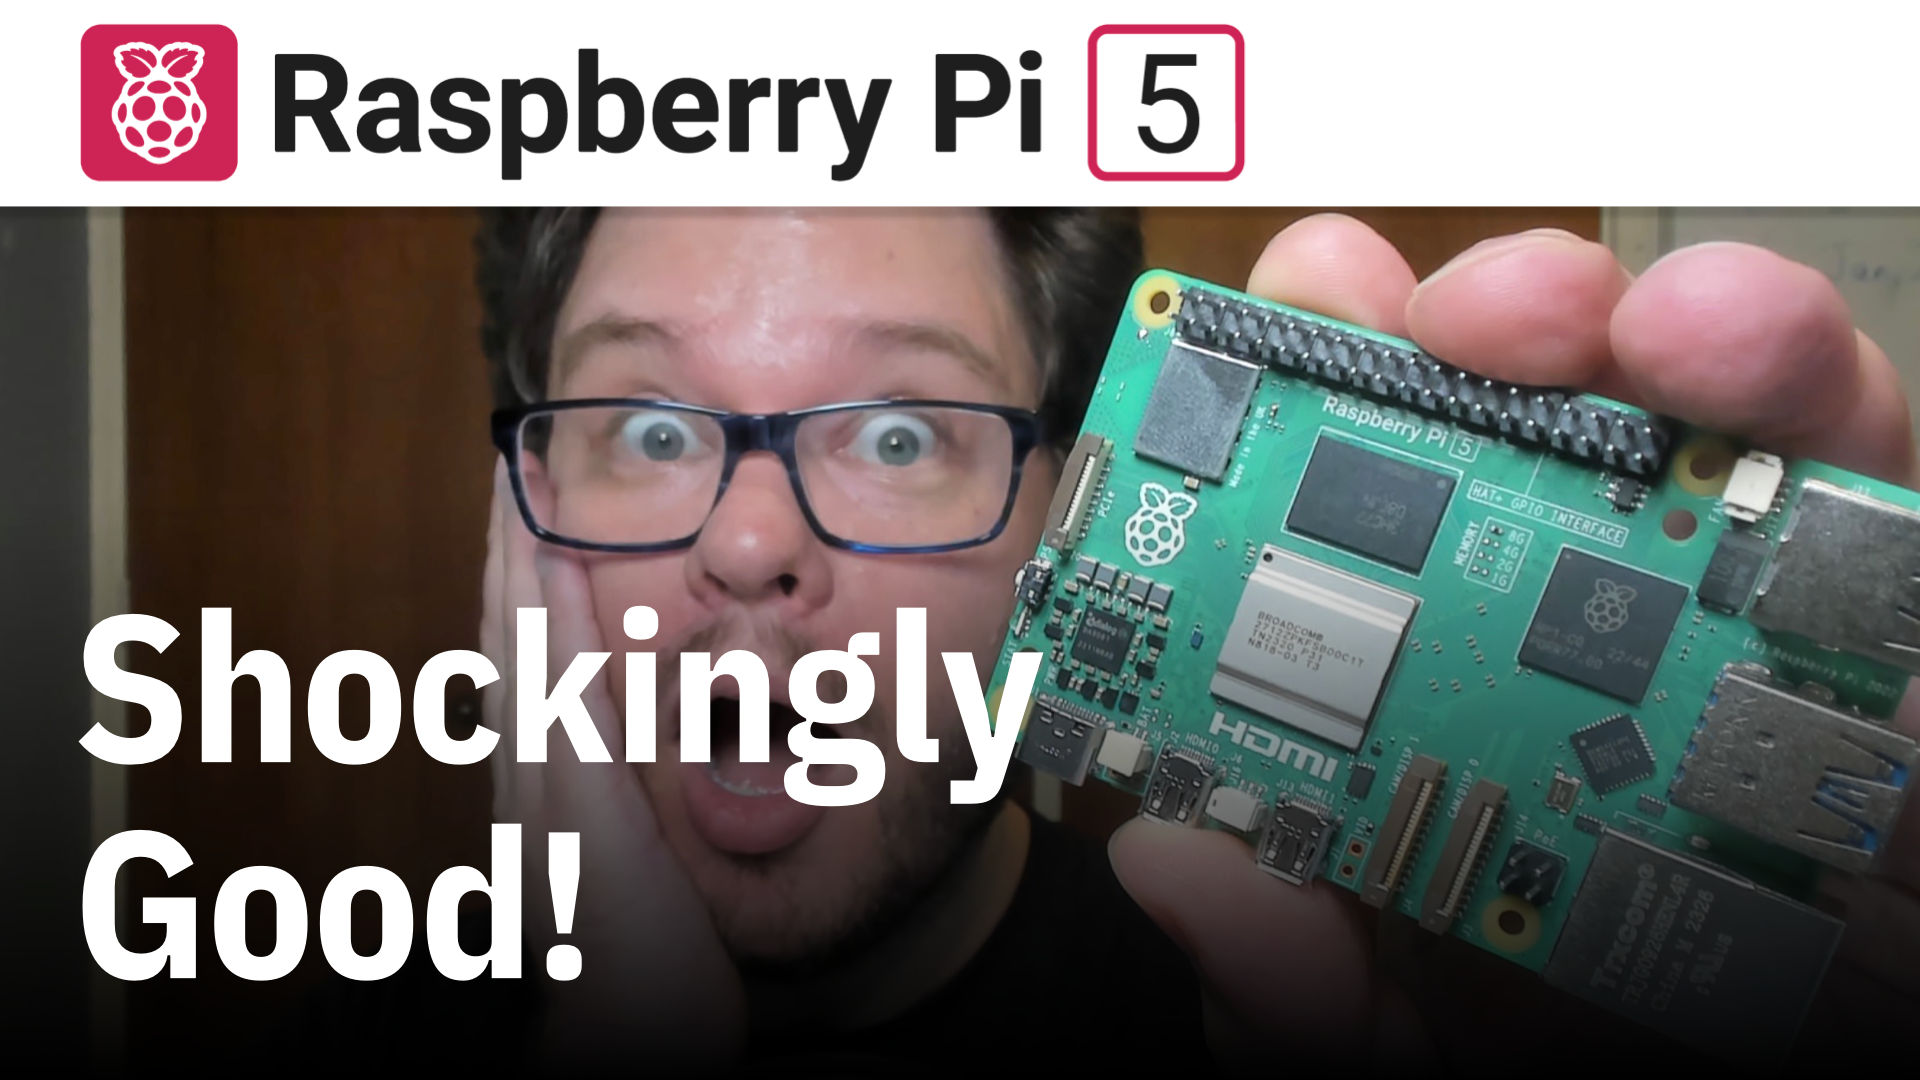 Raspberry Pi 5 Deep Dive Video